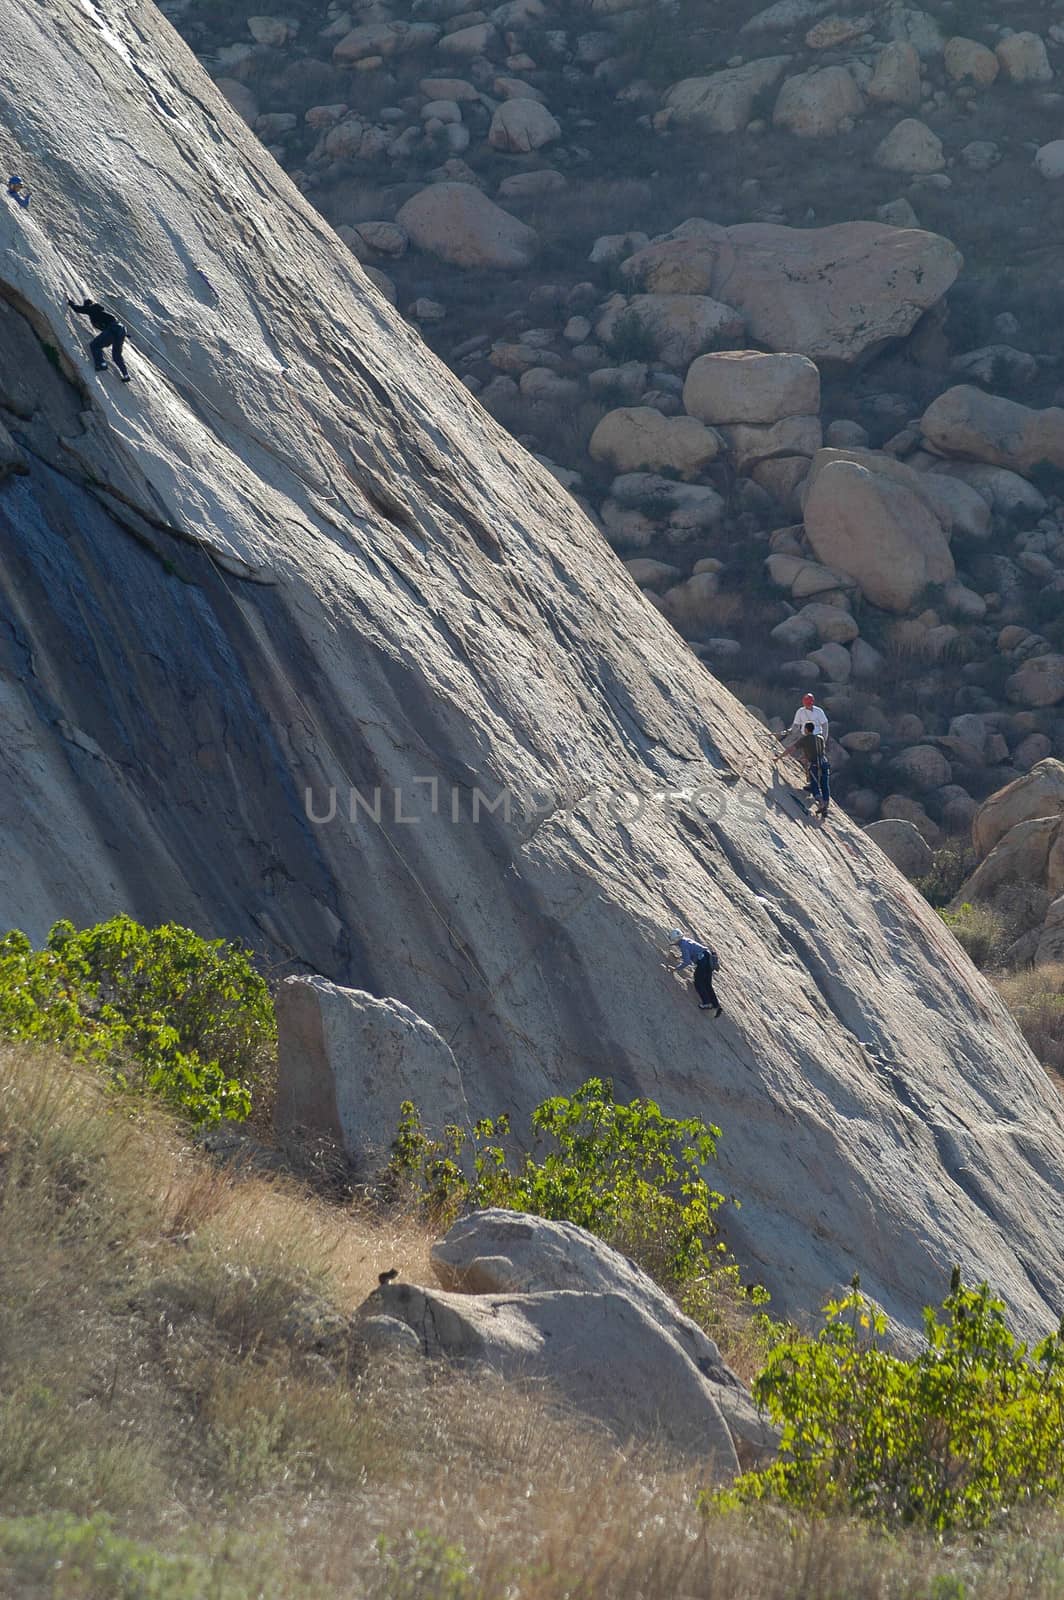 Rock Climbers scale rocks at Lake Perris, CA